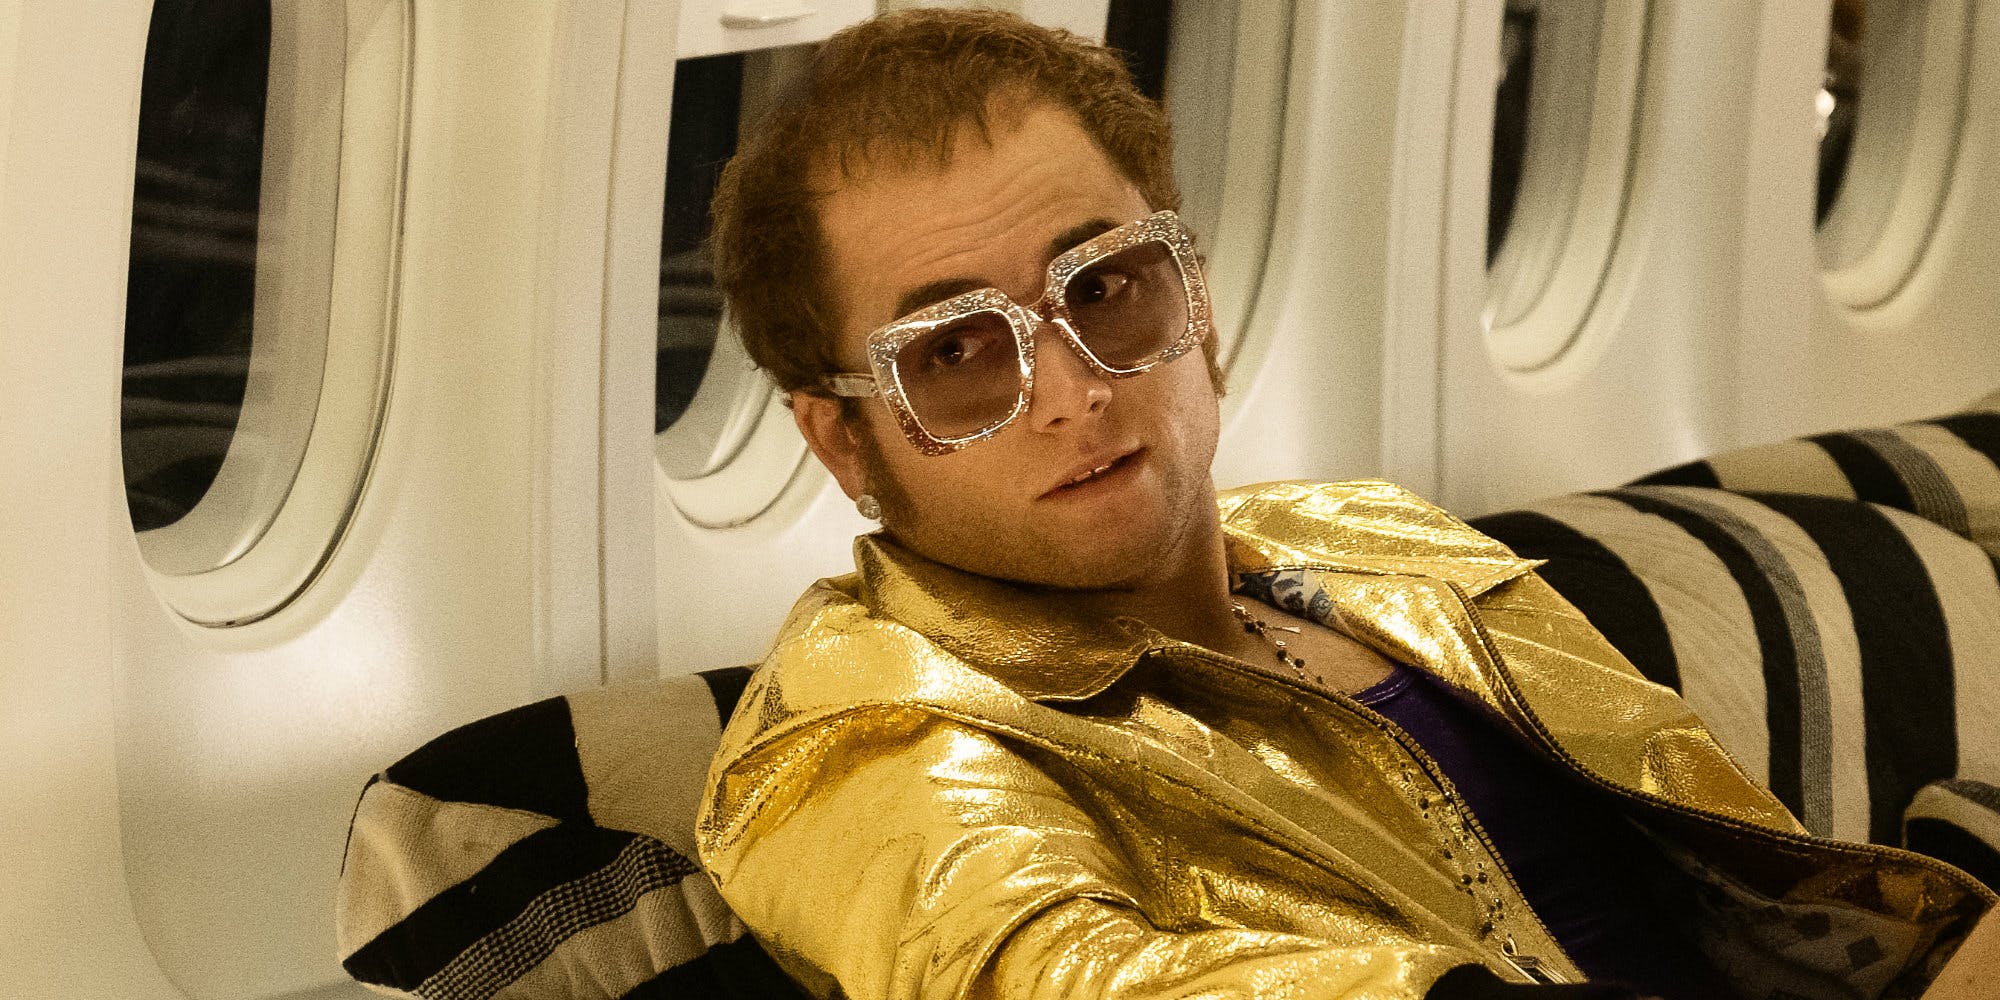 Rocketman | Taron Egerton aparece caracterizado como Elton John em nova imagem